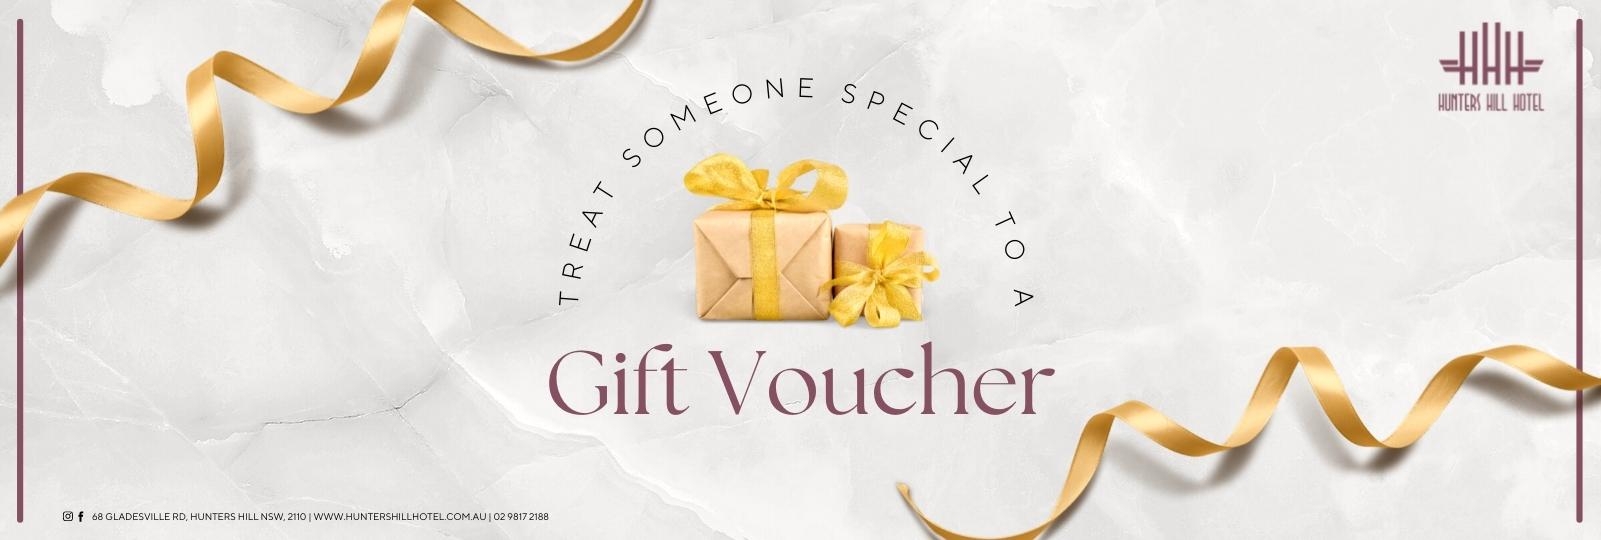 HHH   Gift Vouchers   WEB